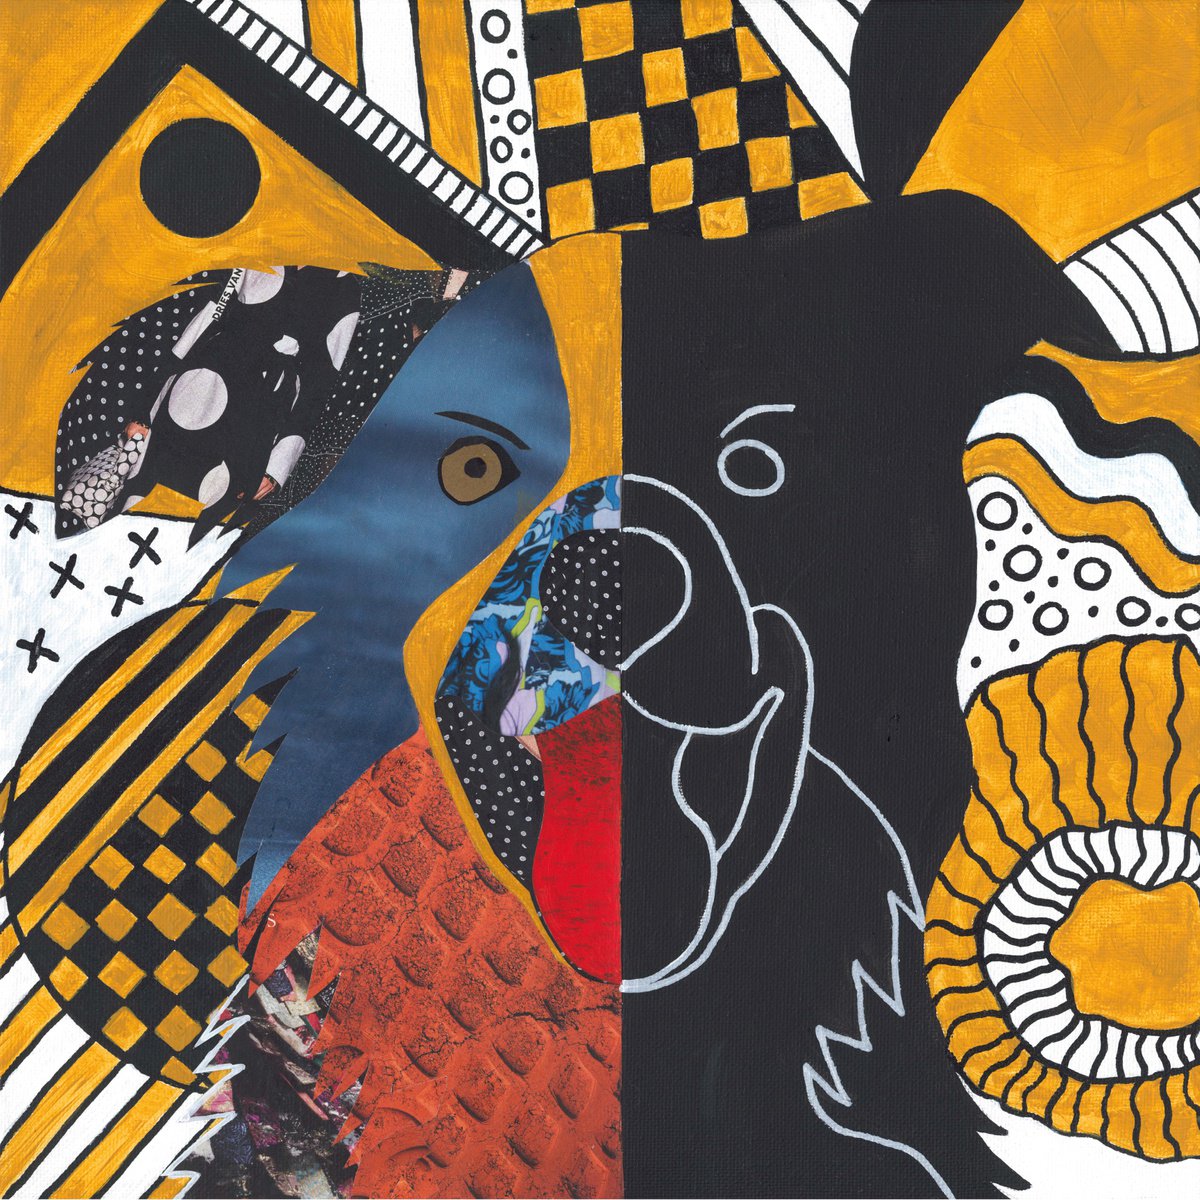 Picasso’s dog - mixed media abstract collage by Olga Sennikova